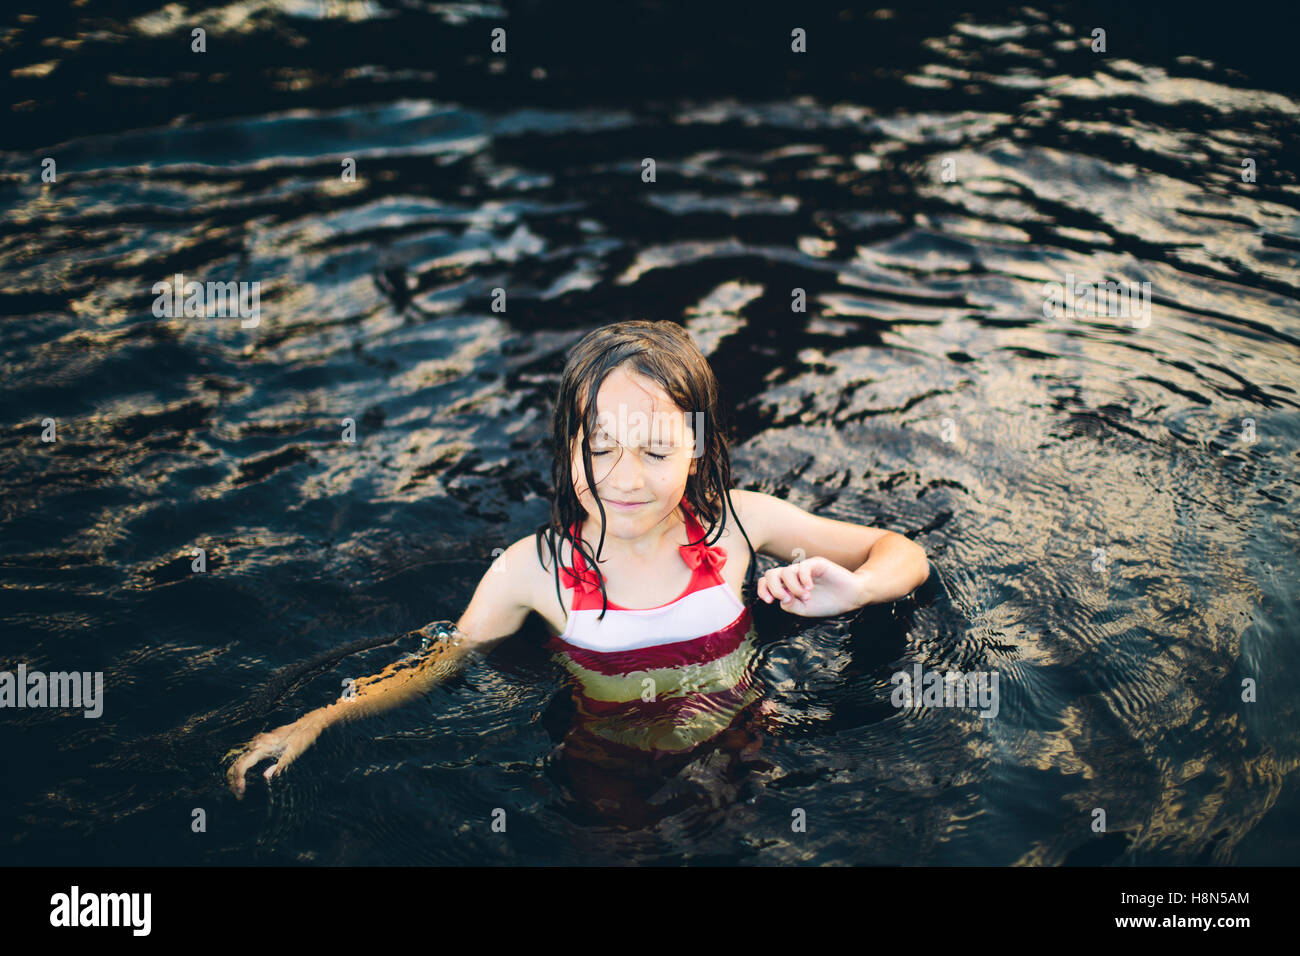 Girl (8-9) in swimming costume standing in water Stock Photo